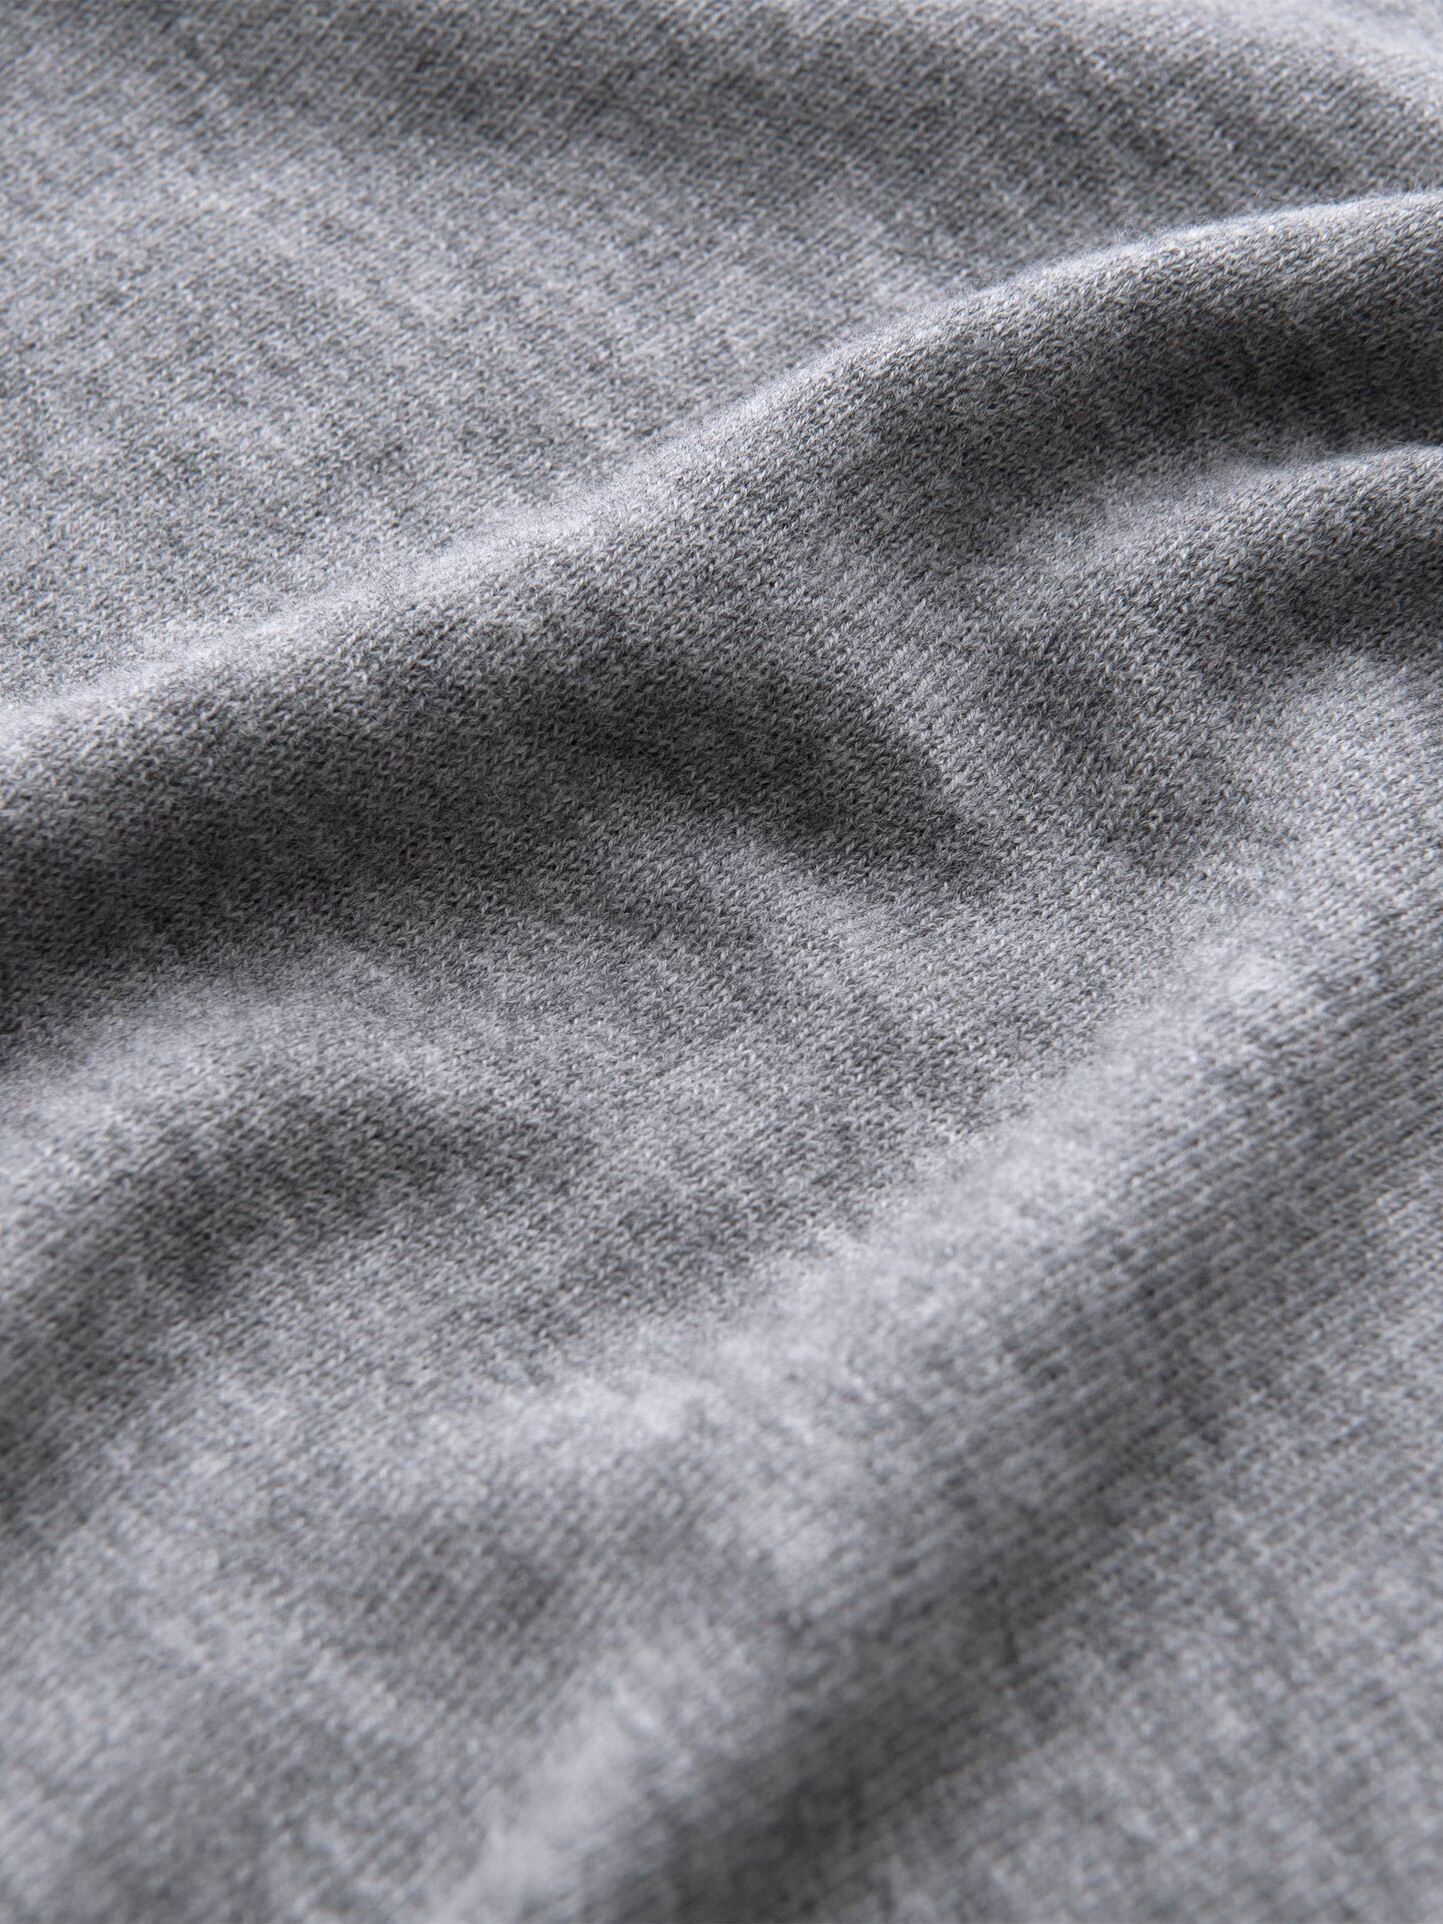 Light Grey Melange Merino Crewneck Sweater by Proper Cloth